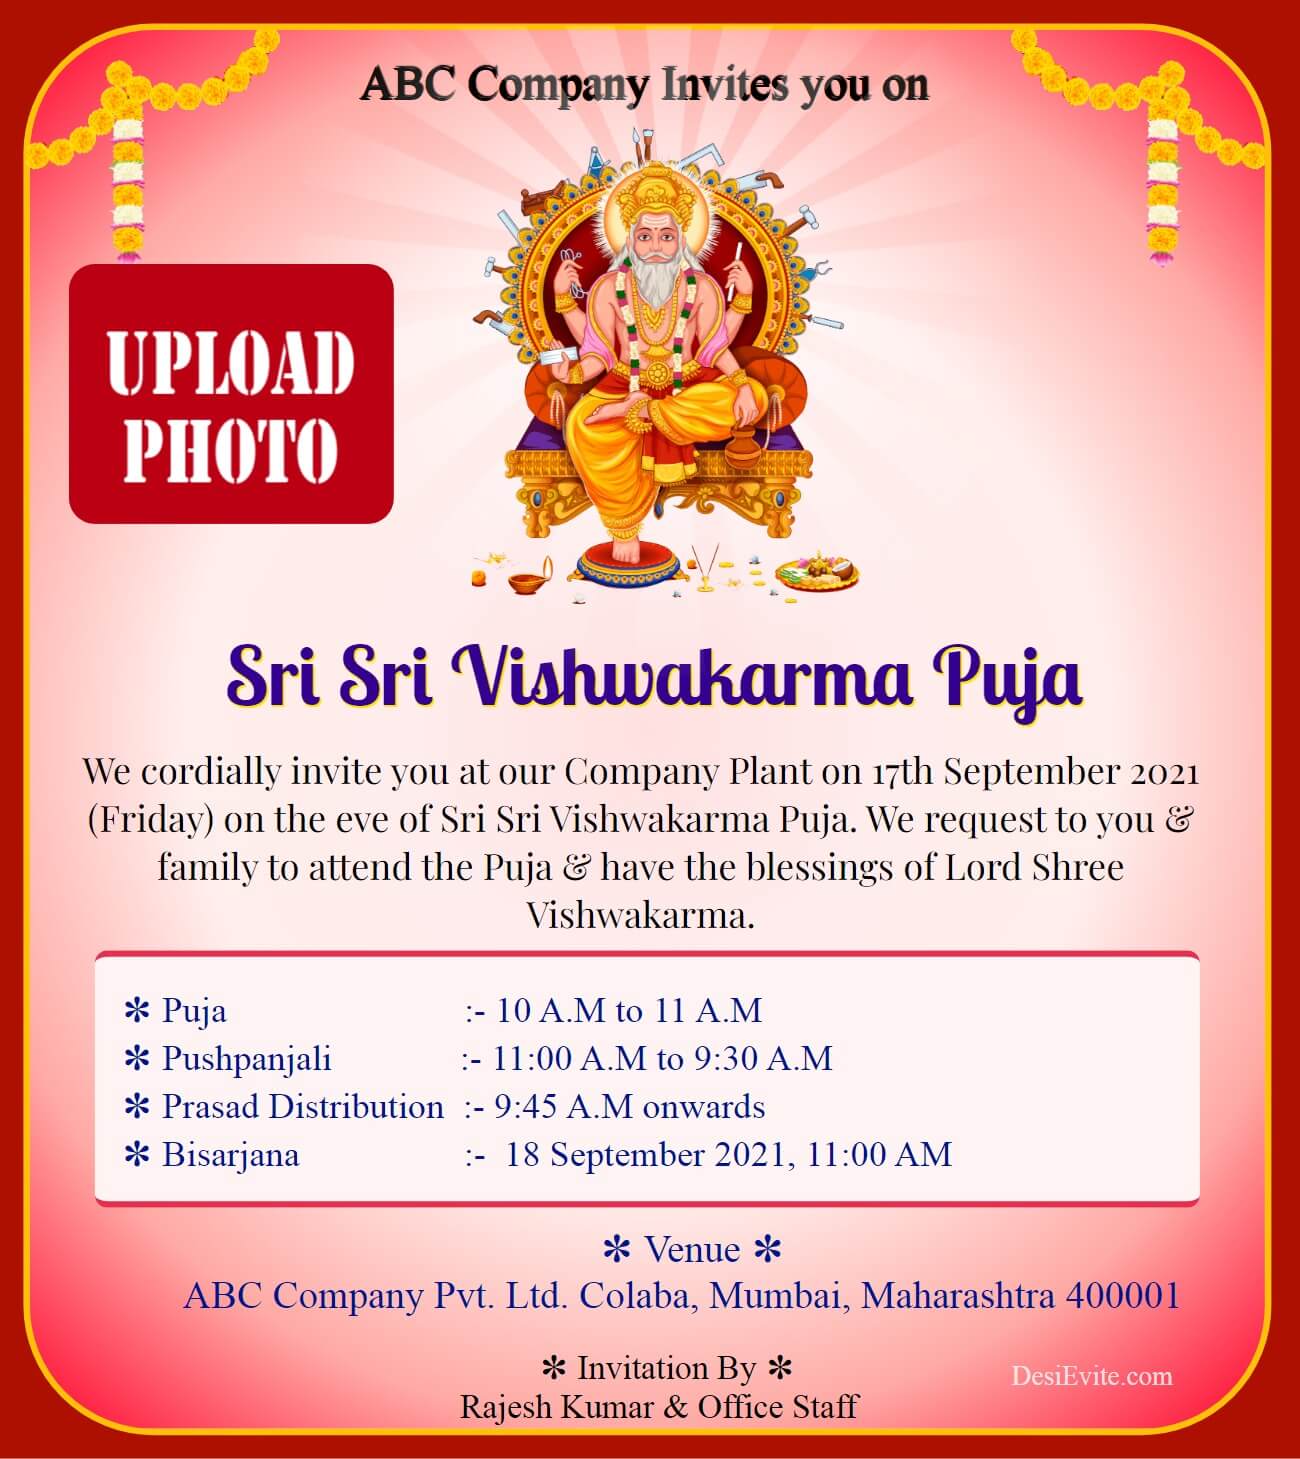 Vishwakarma puja invitation card for company with logo